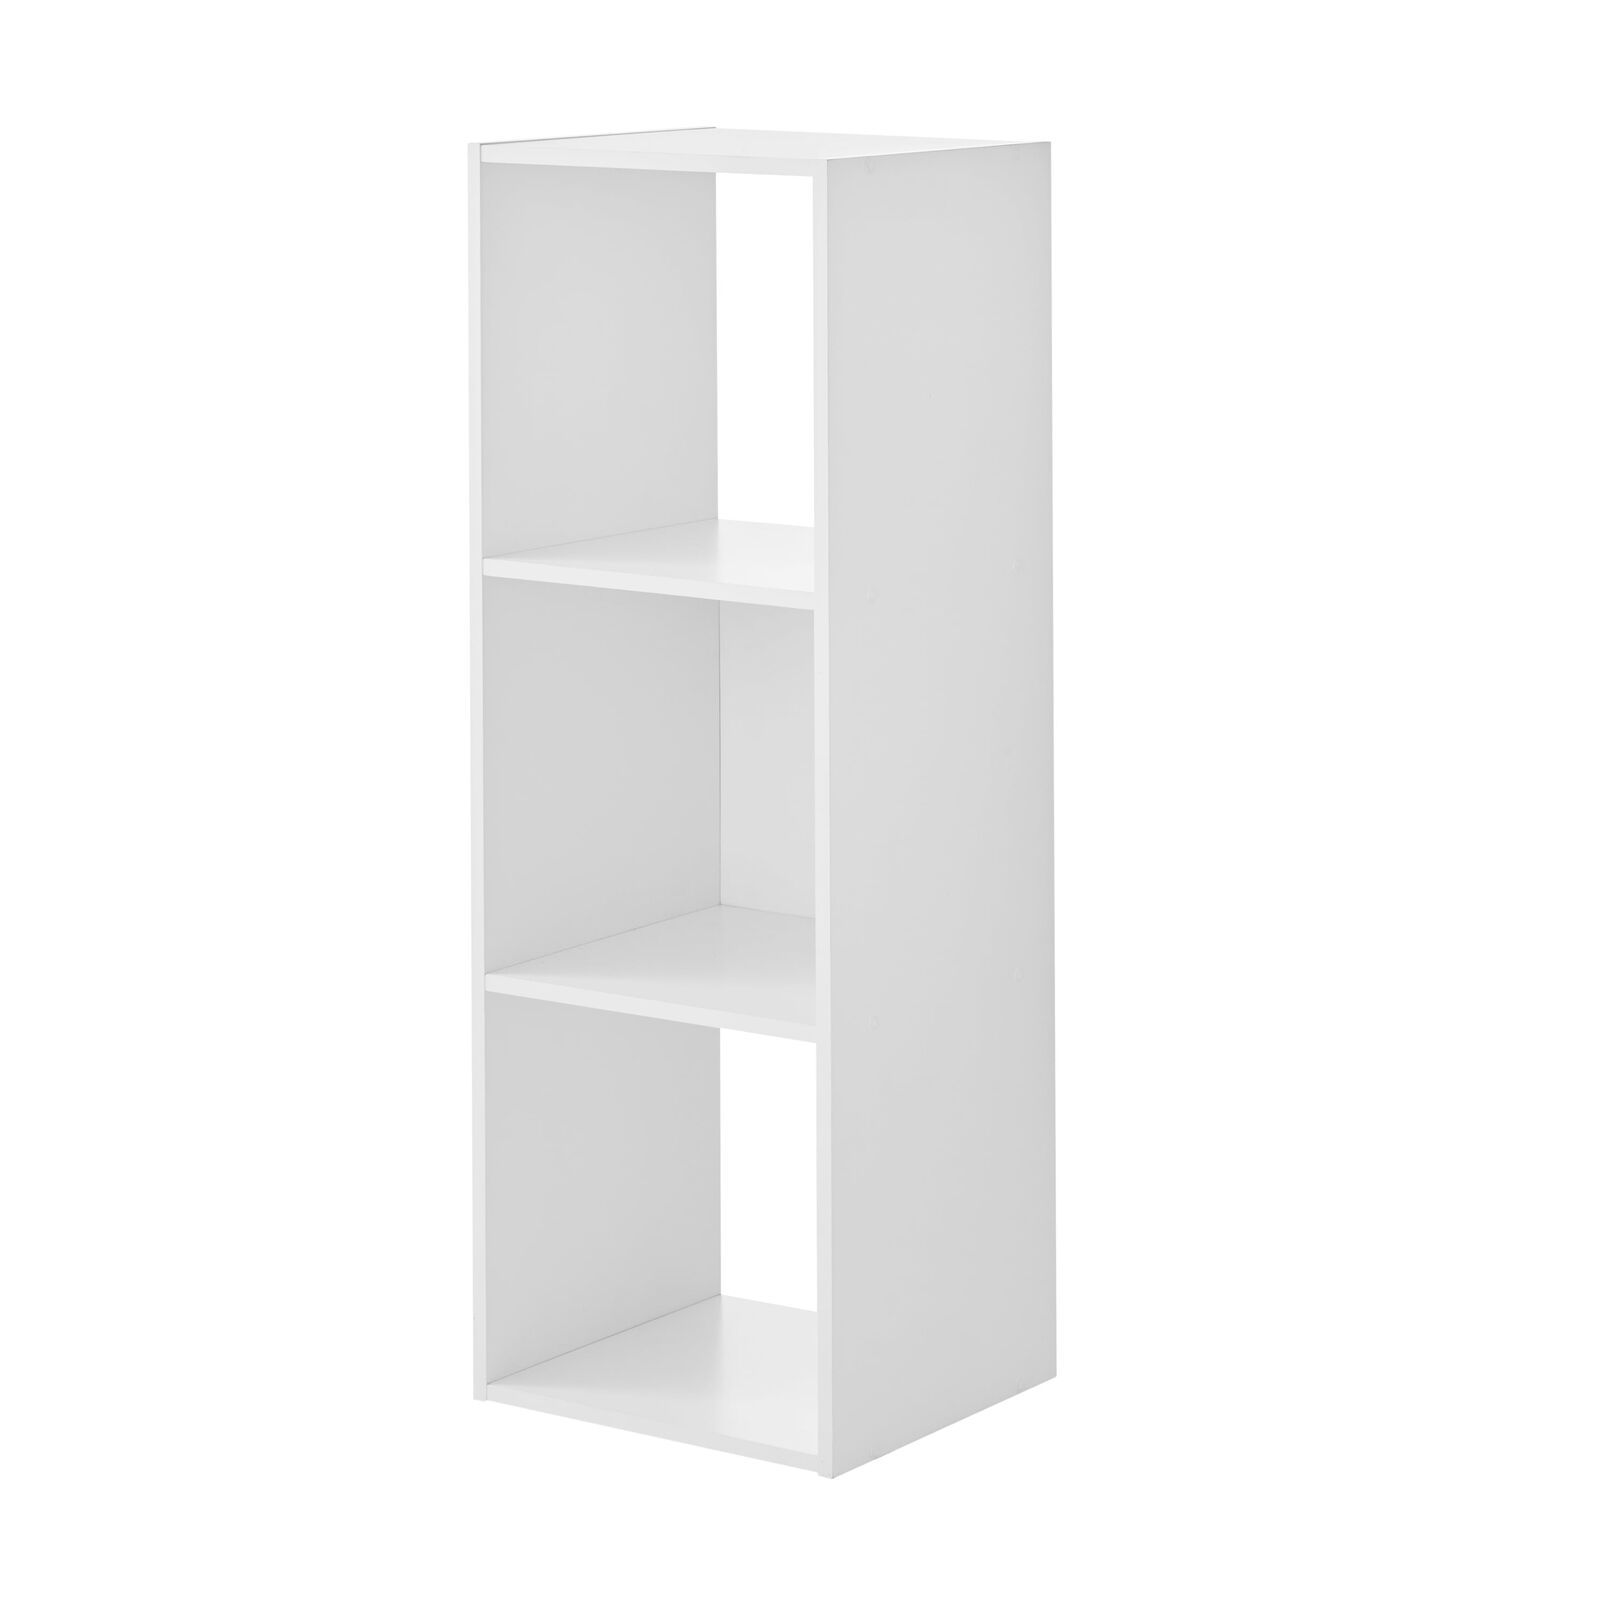 Mainstays 3-Cube Storage Organizer, White Без бренда